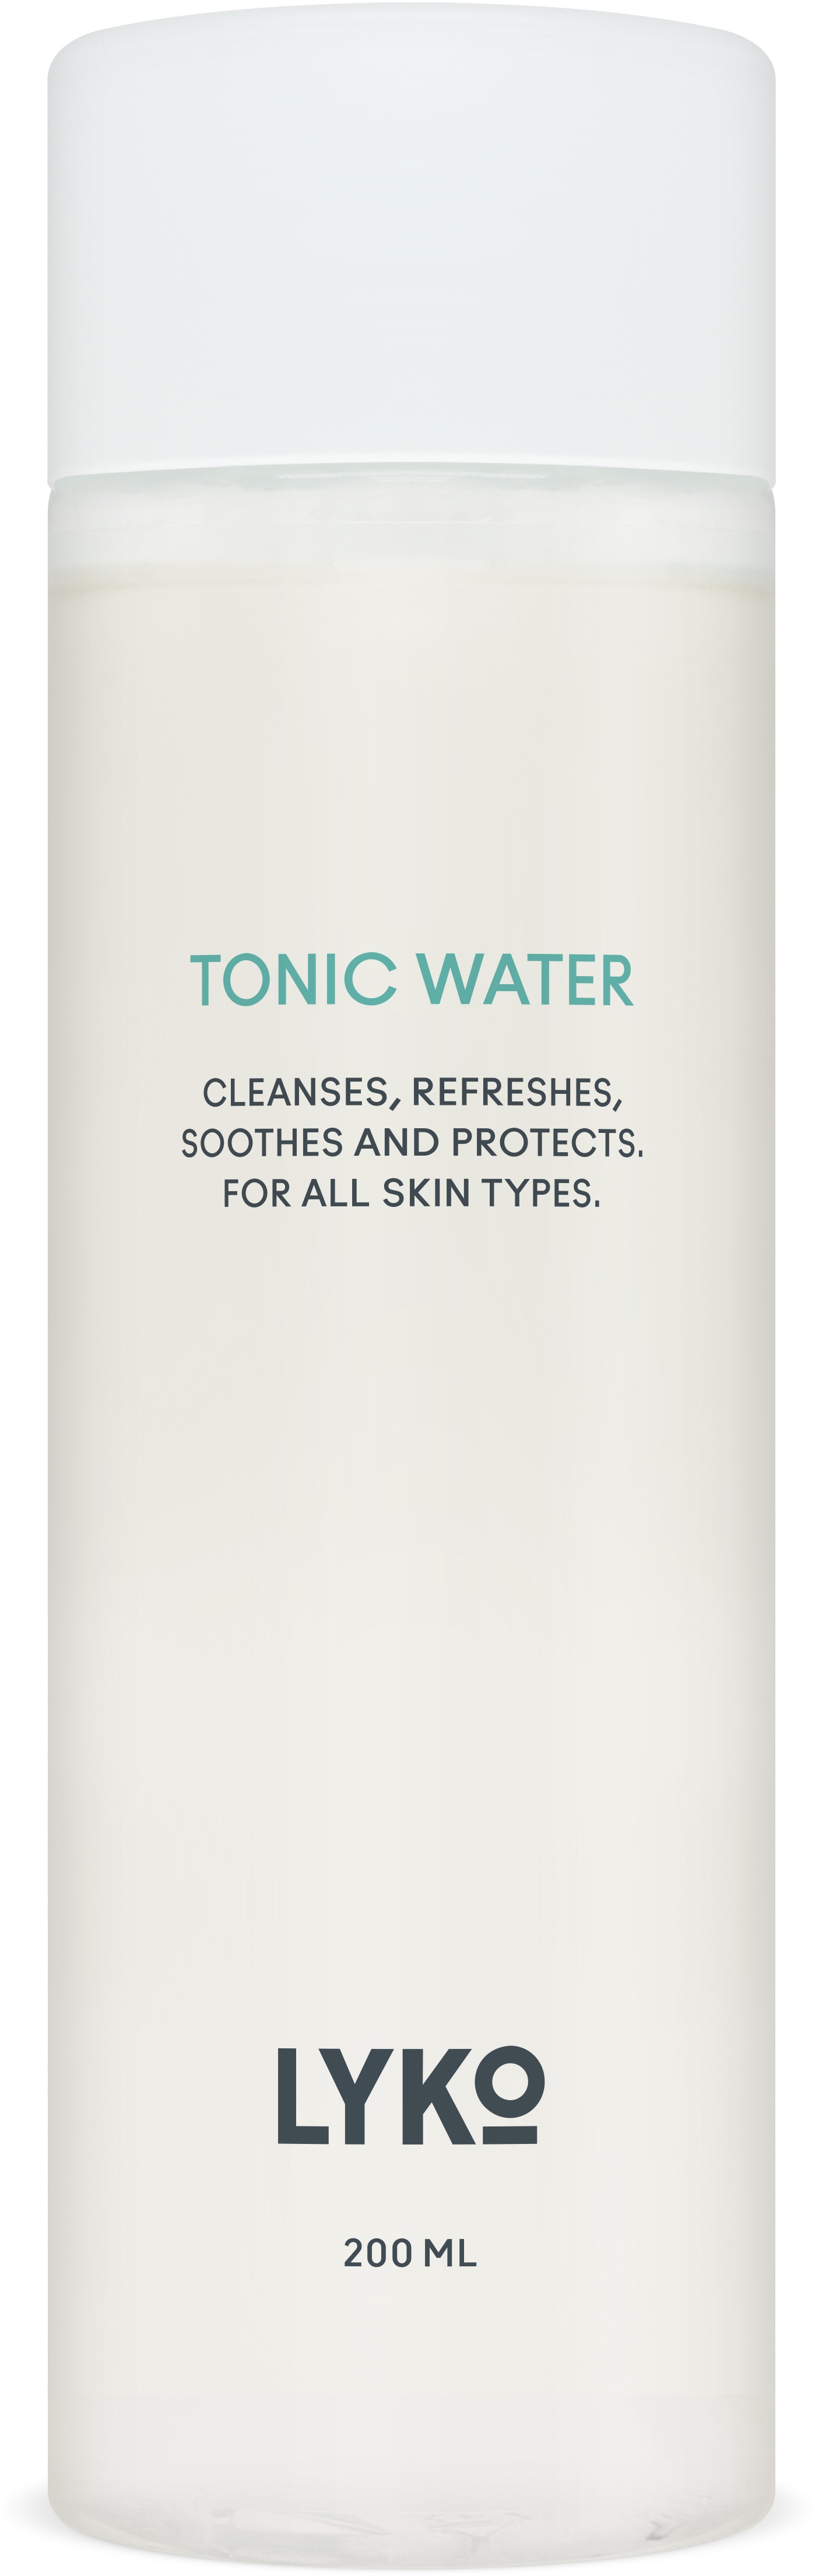 Lyko Tonic Water